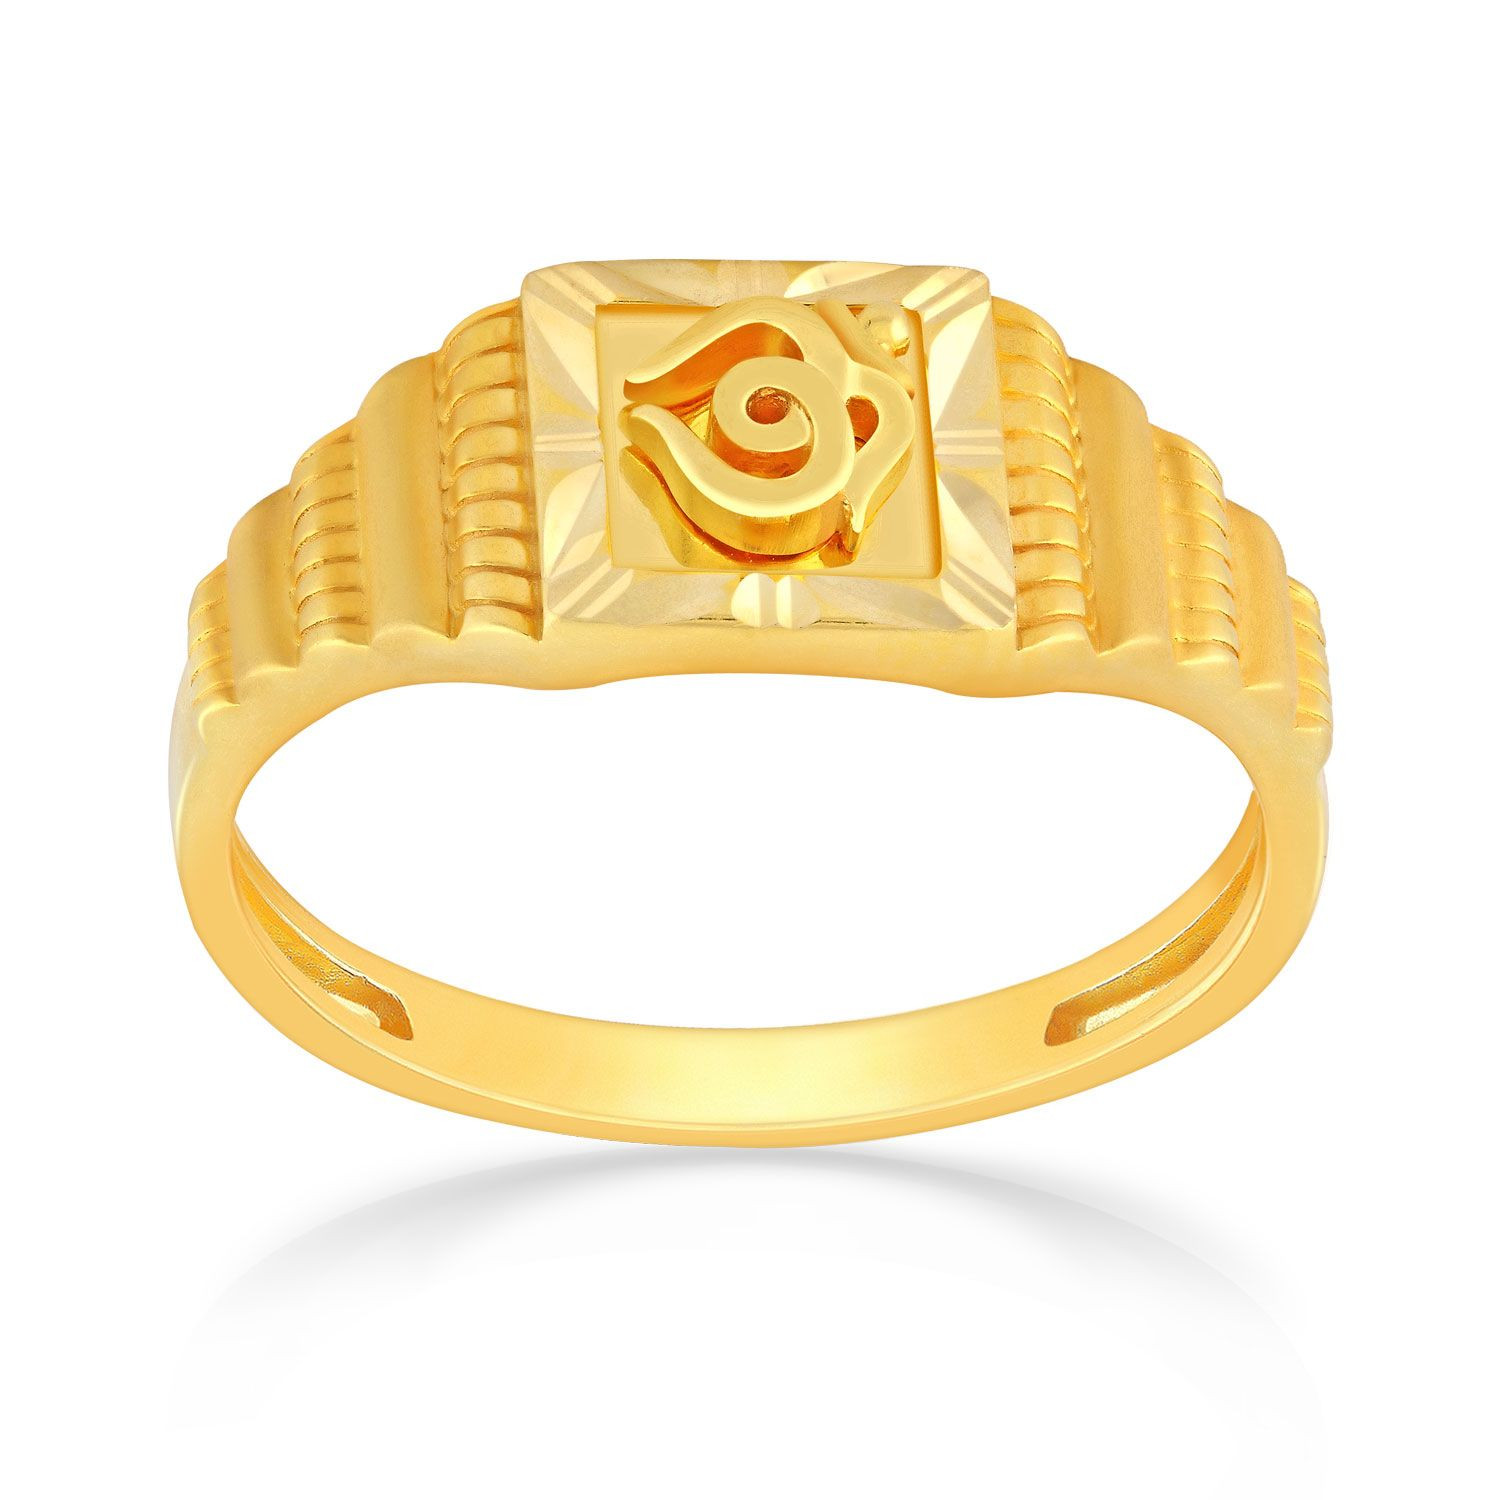 Malabar 22 KT Gold Studded Ring For Men FRNOSKY520